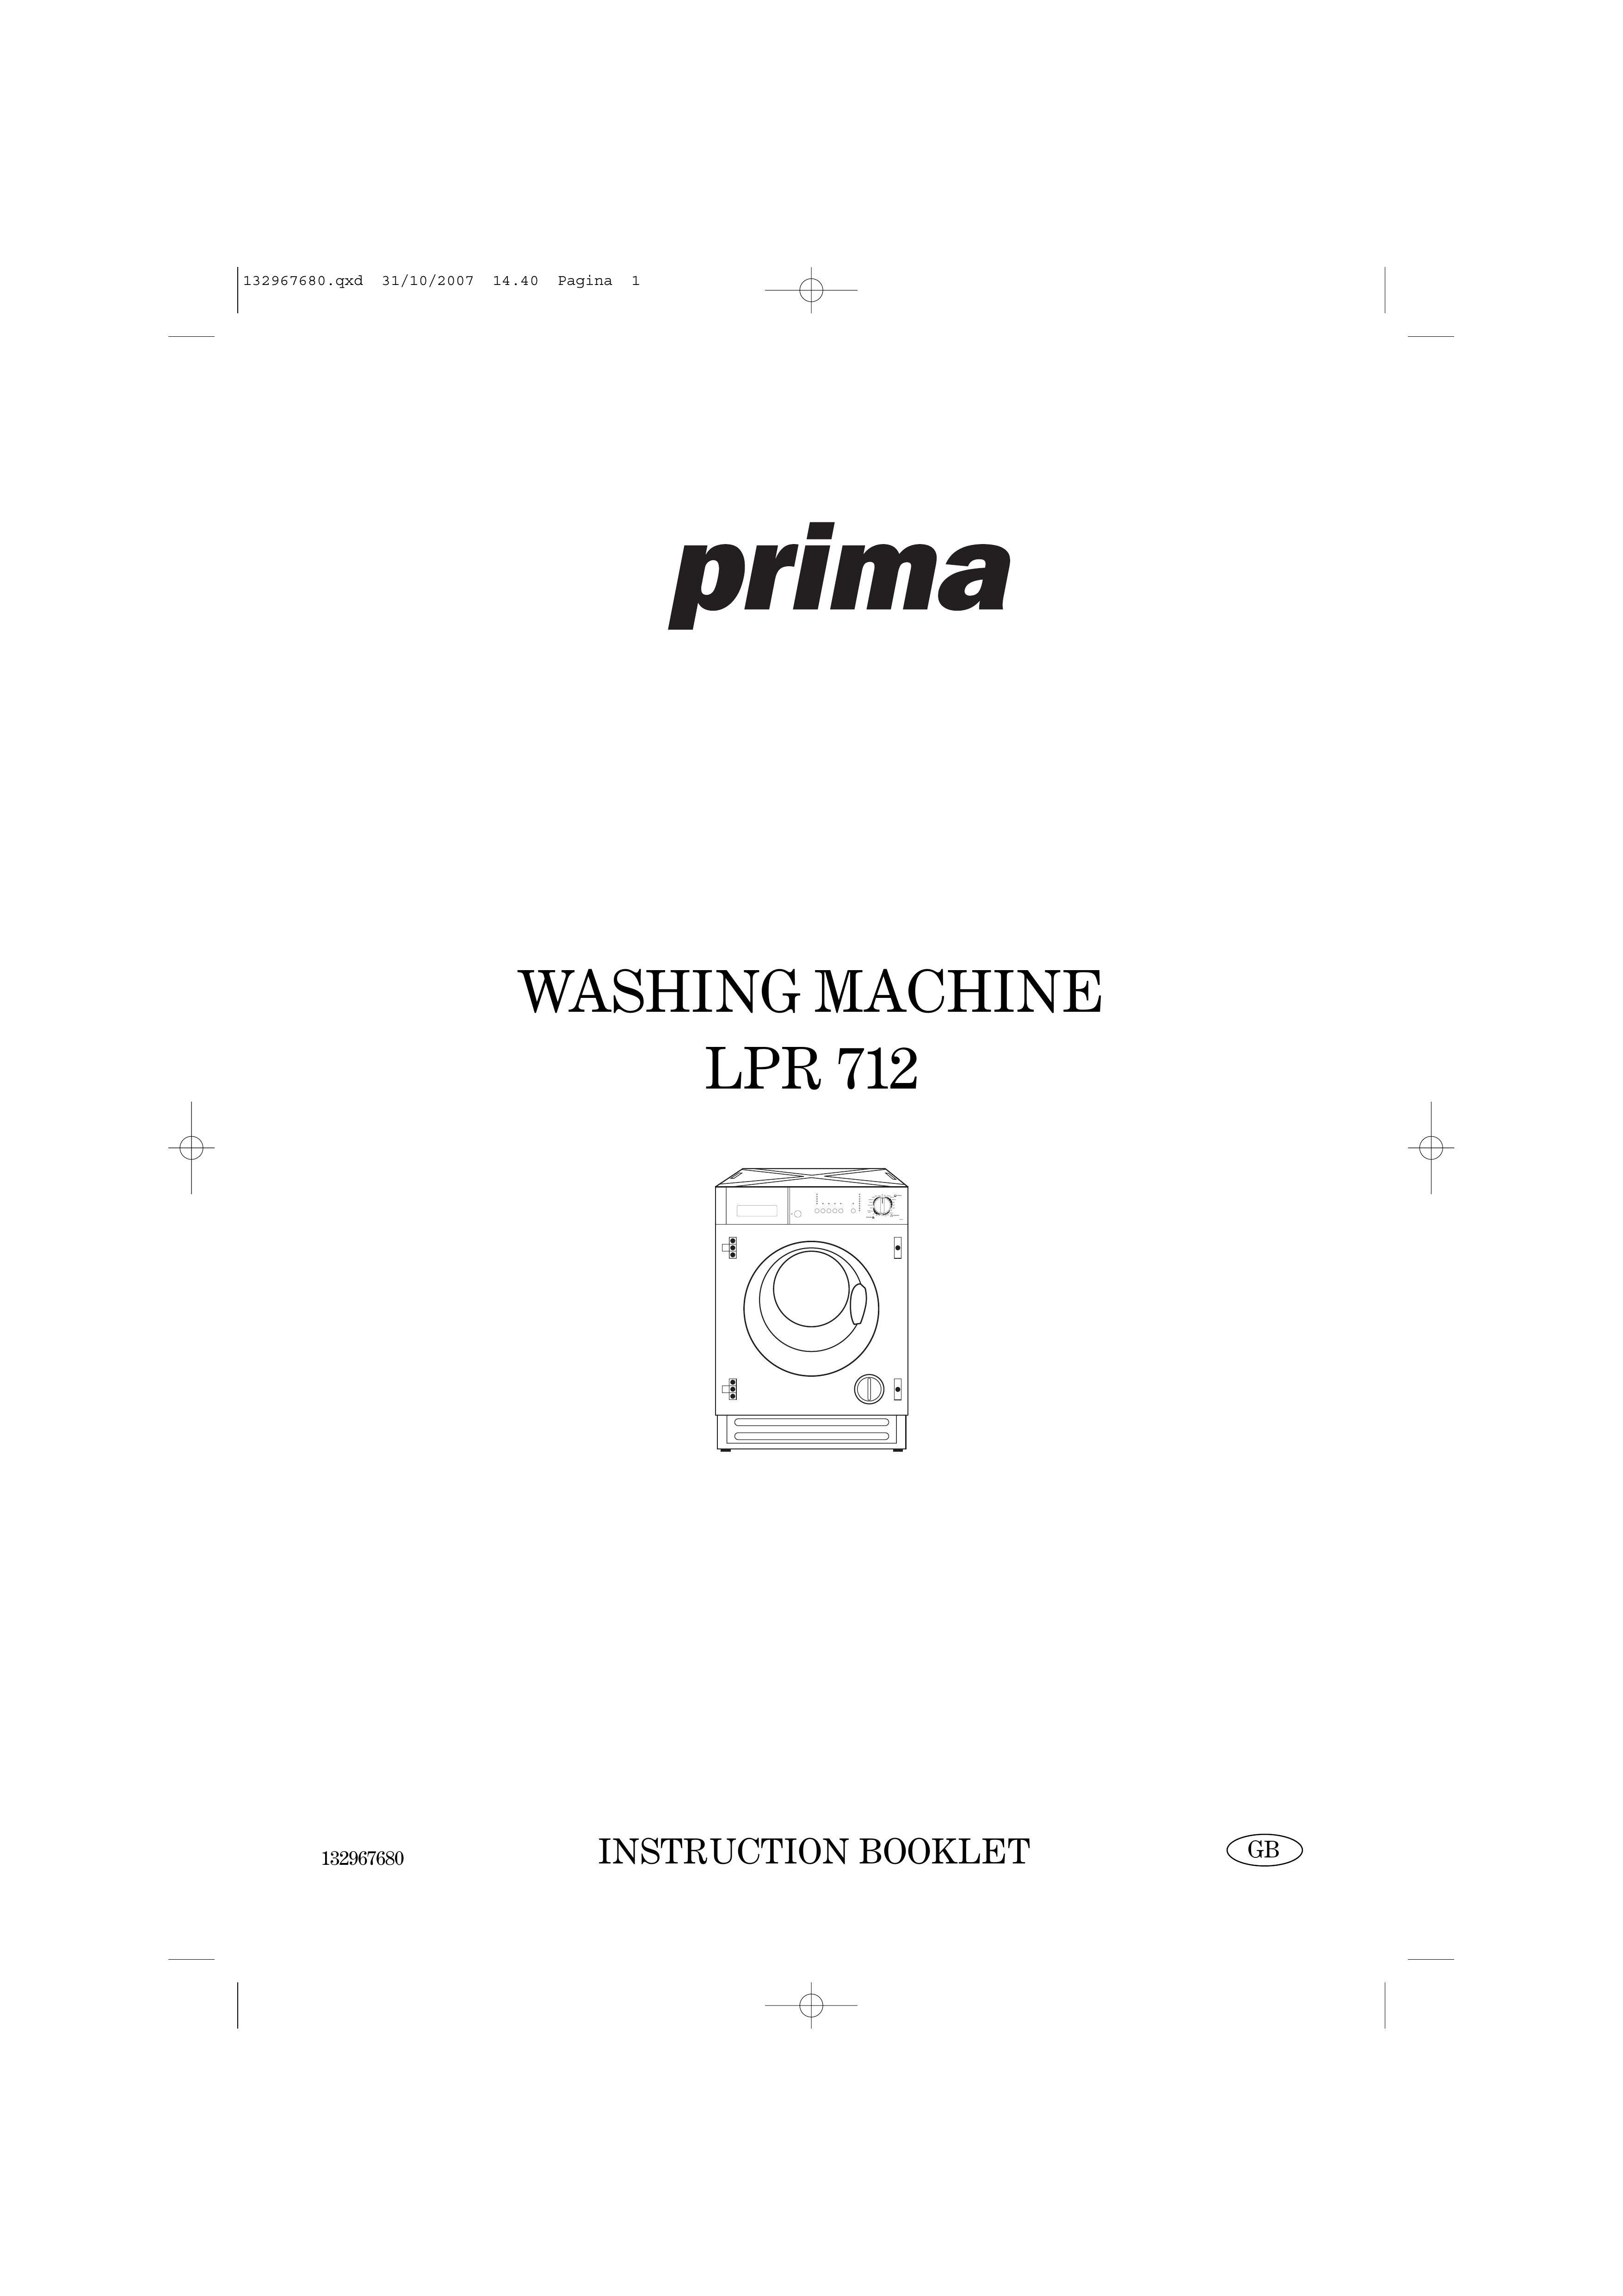 Prima LPR 712 Washer User Manual